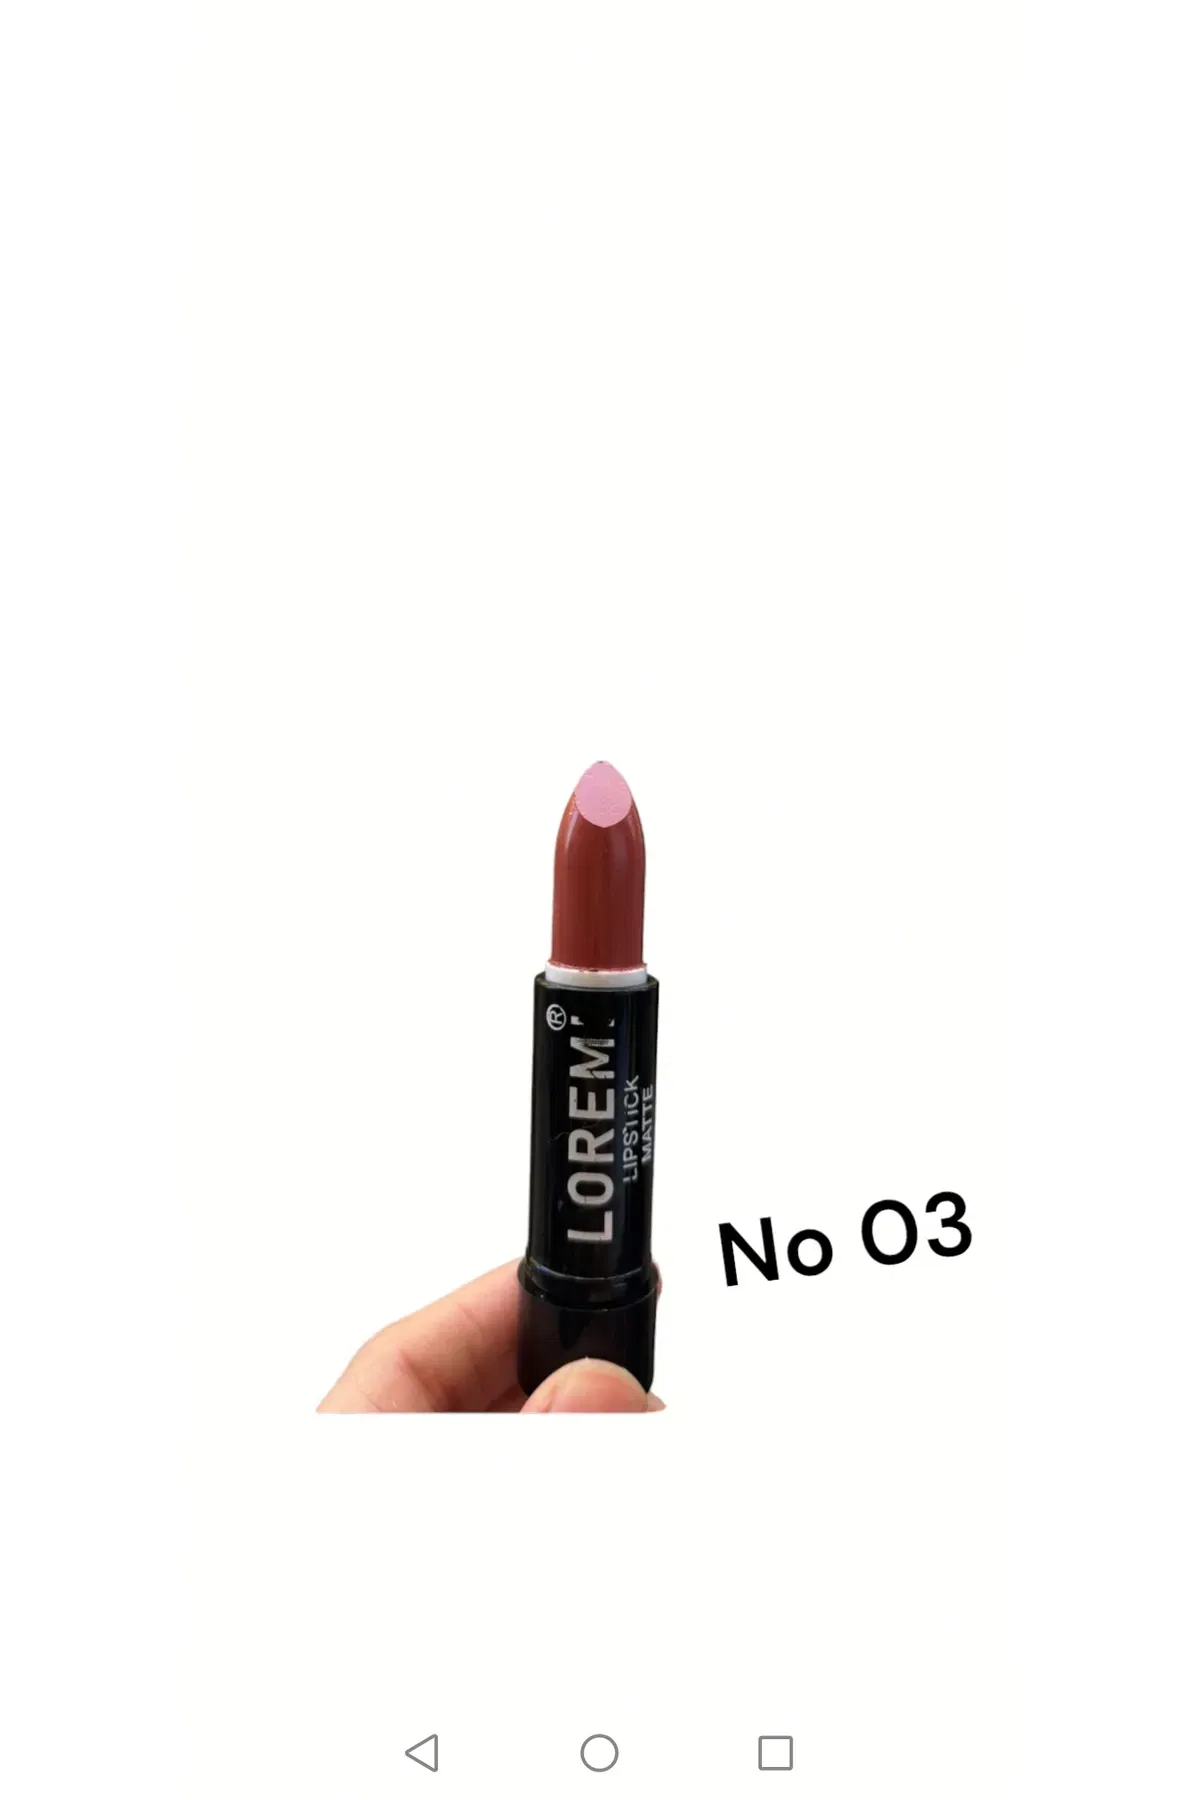 Loremi Lipstick Ruj No 03 İncelemesi kapak resmi